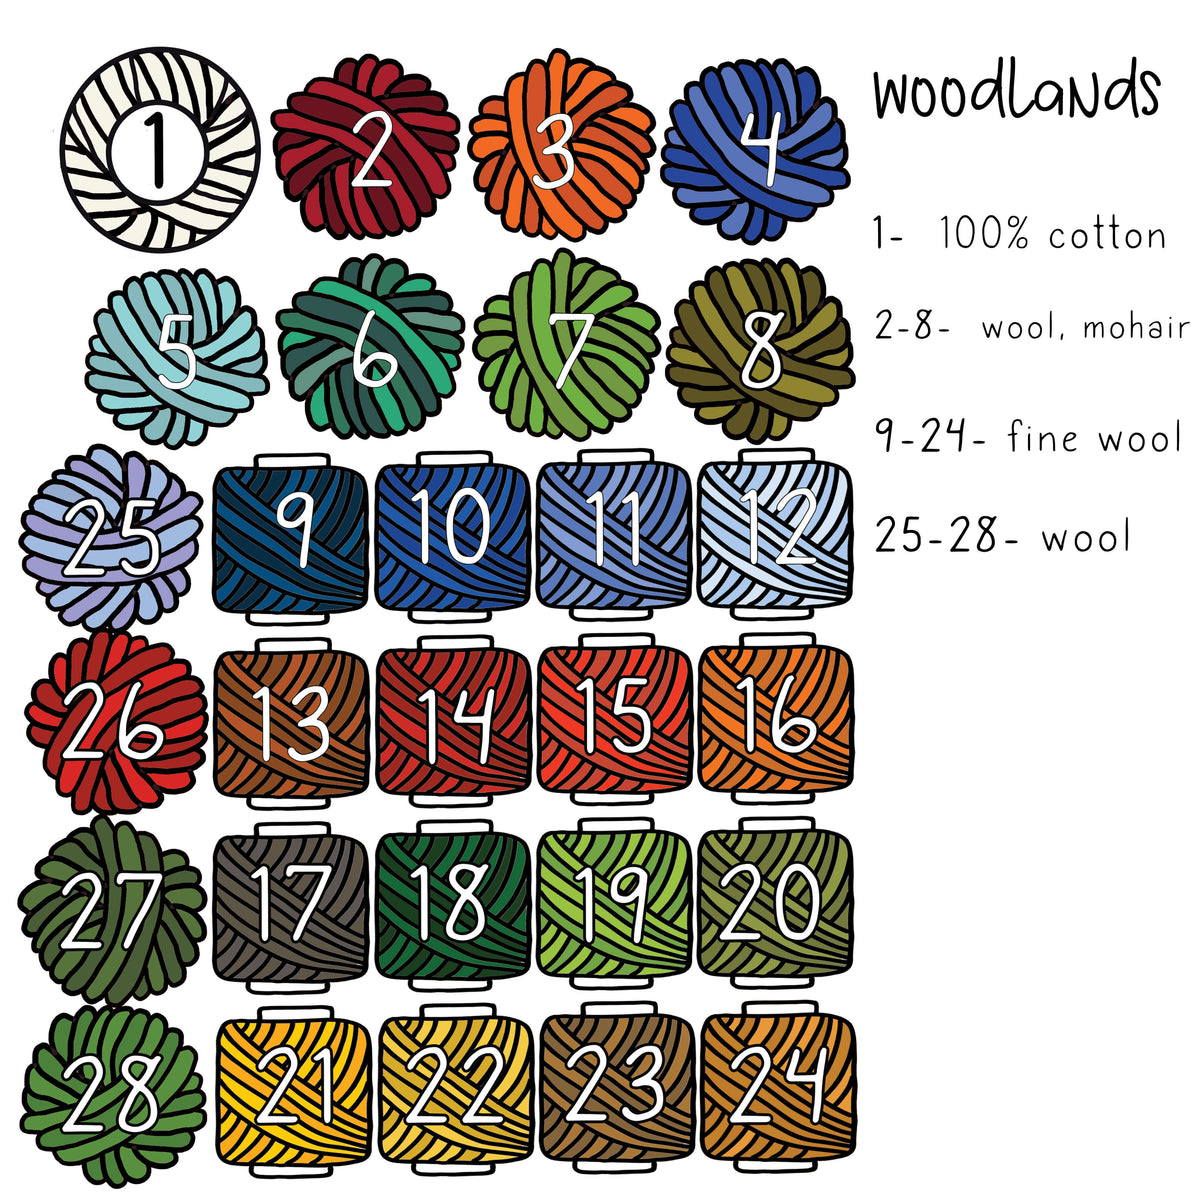 Weave the World - Woodlands - Weaving Kit